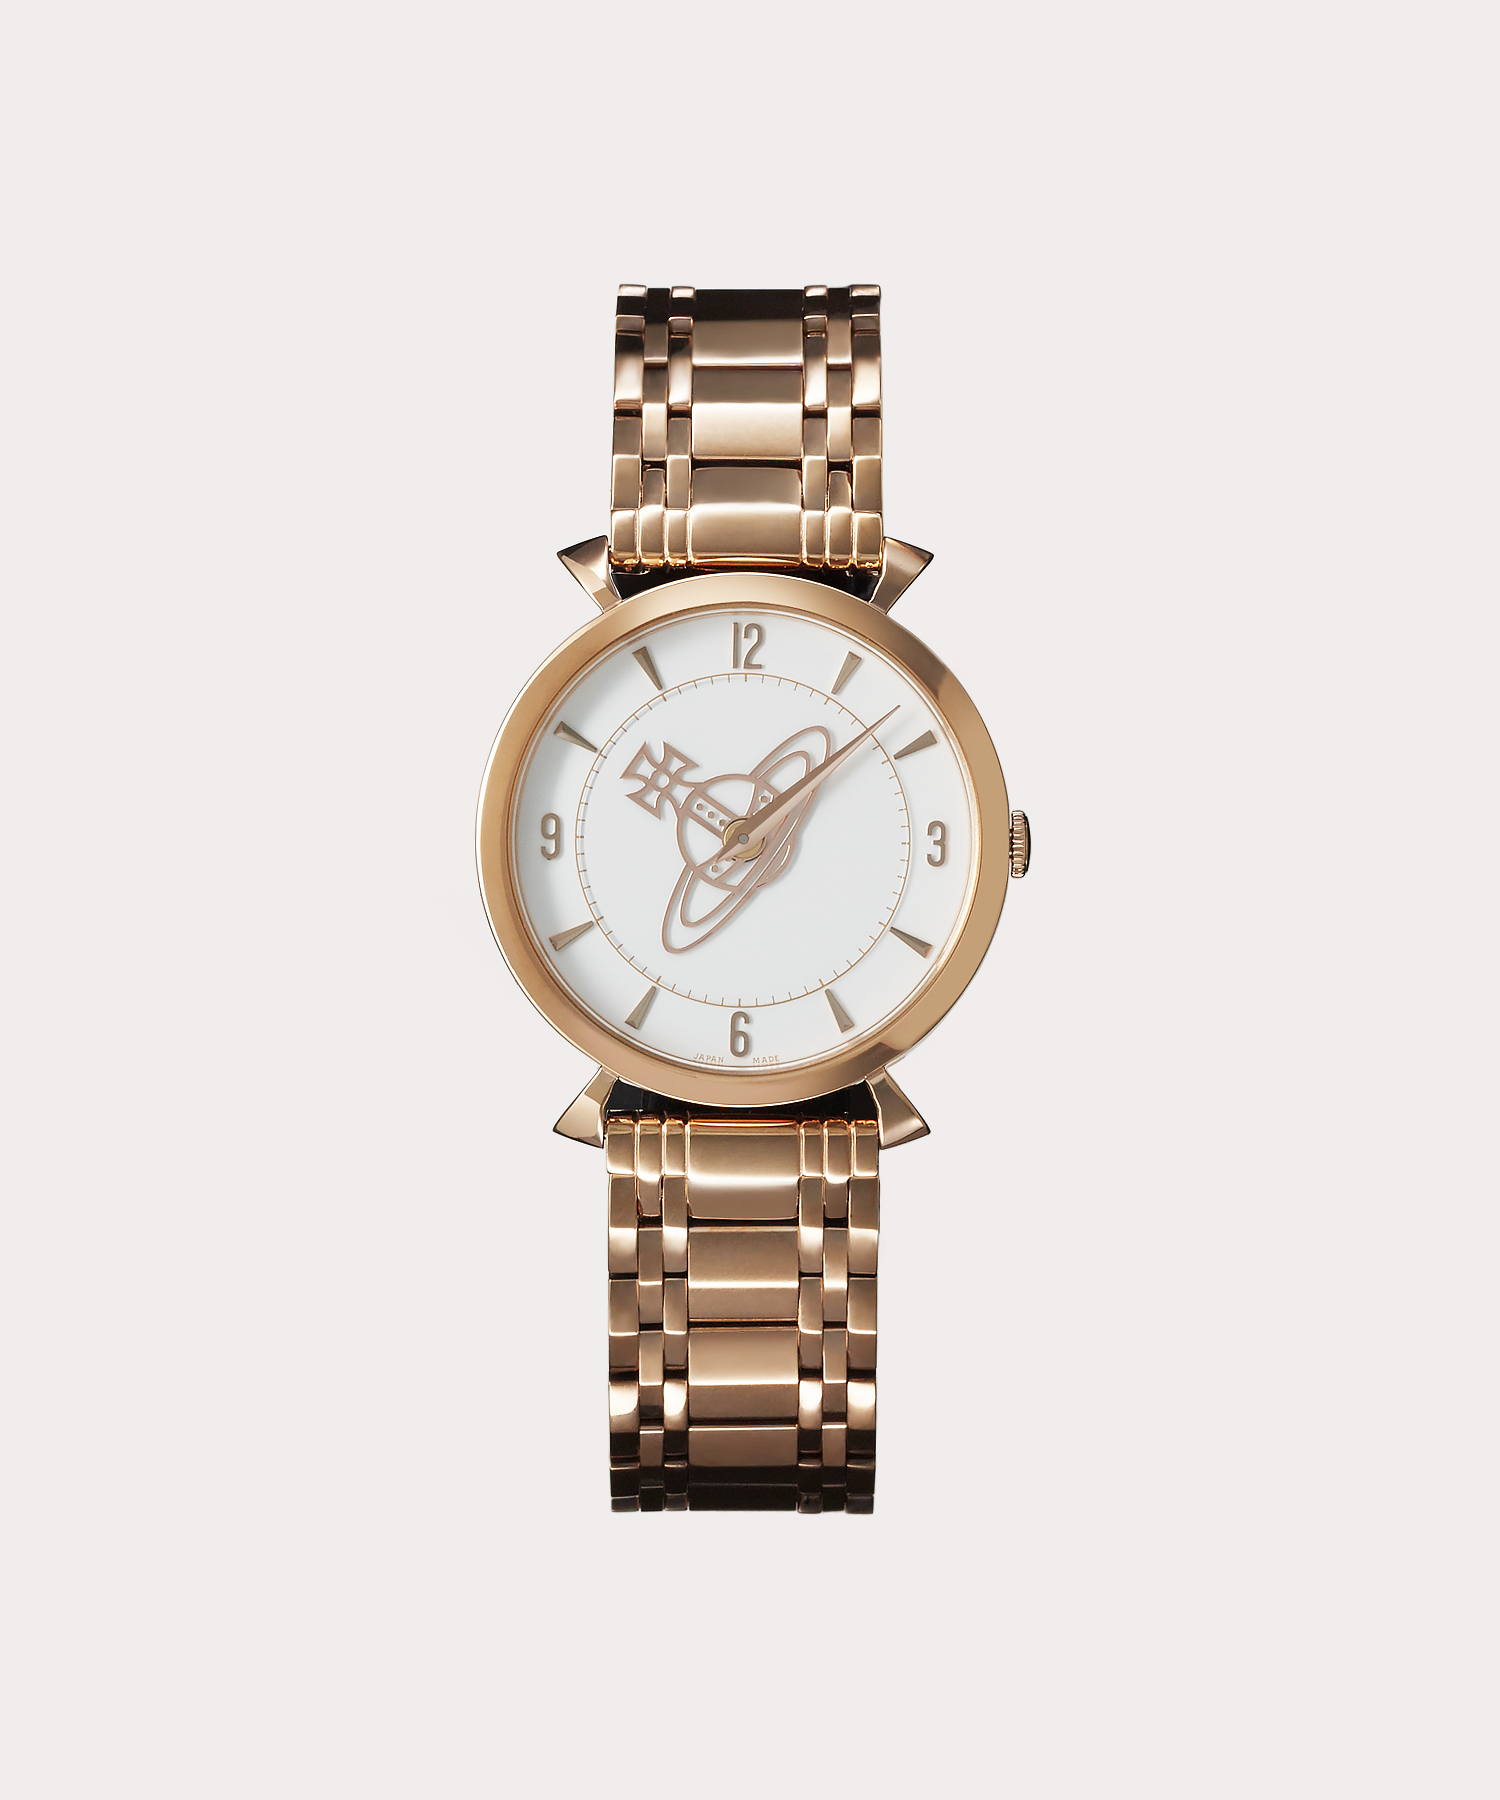 Vivian Westwood 腕時計